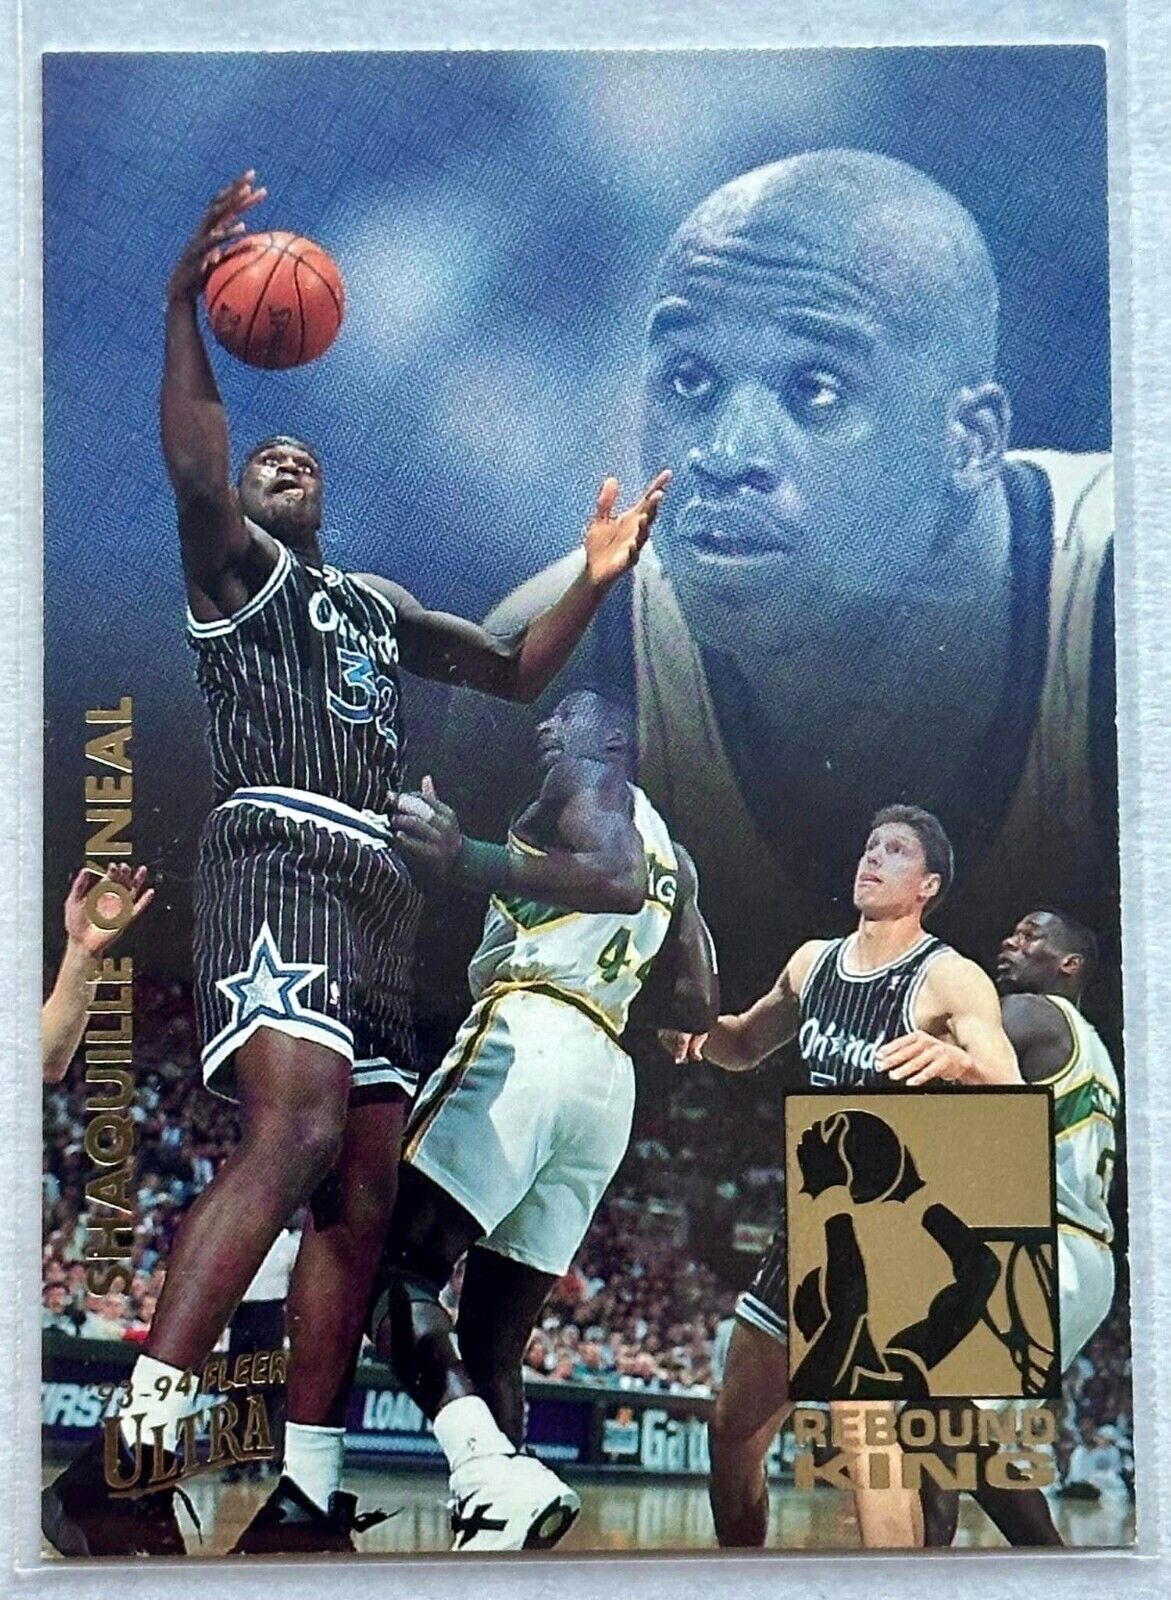 1993-94 Ultra Rebound Kings #9 Shaquille O'Neal Orlando Magic-